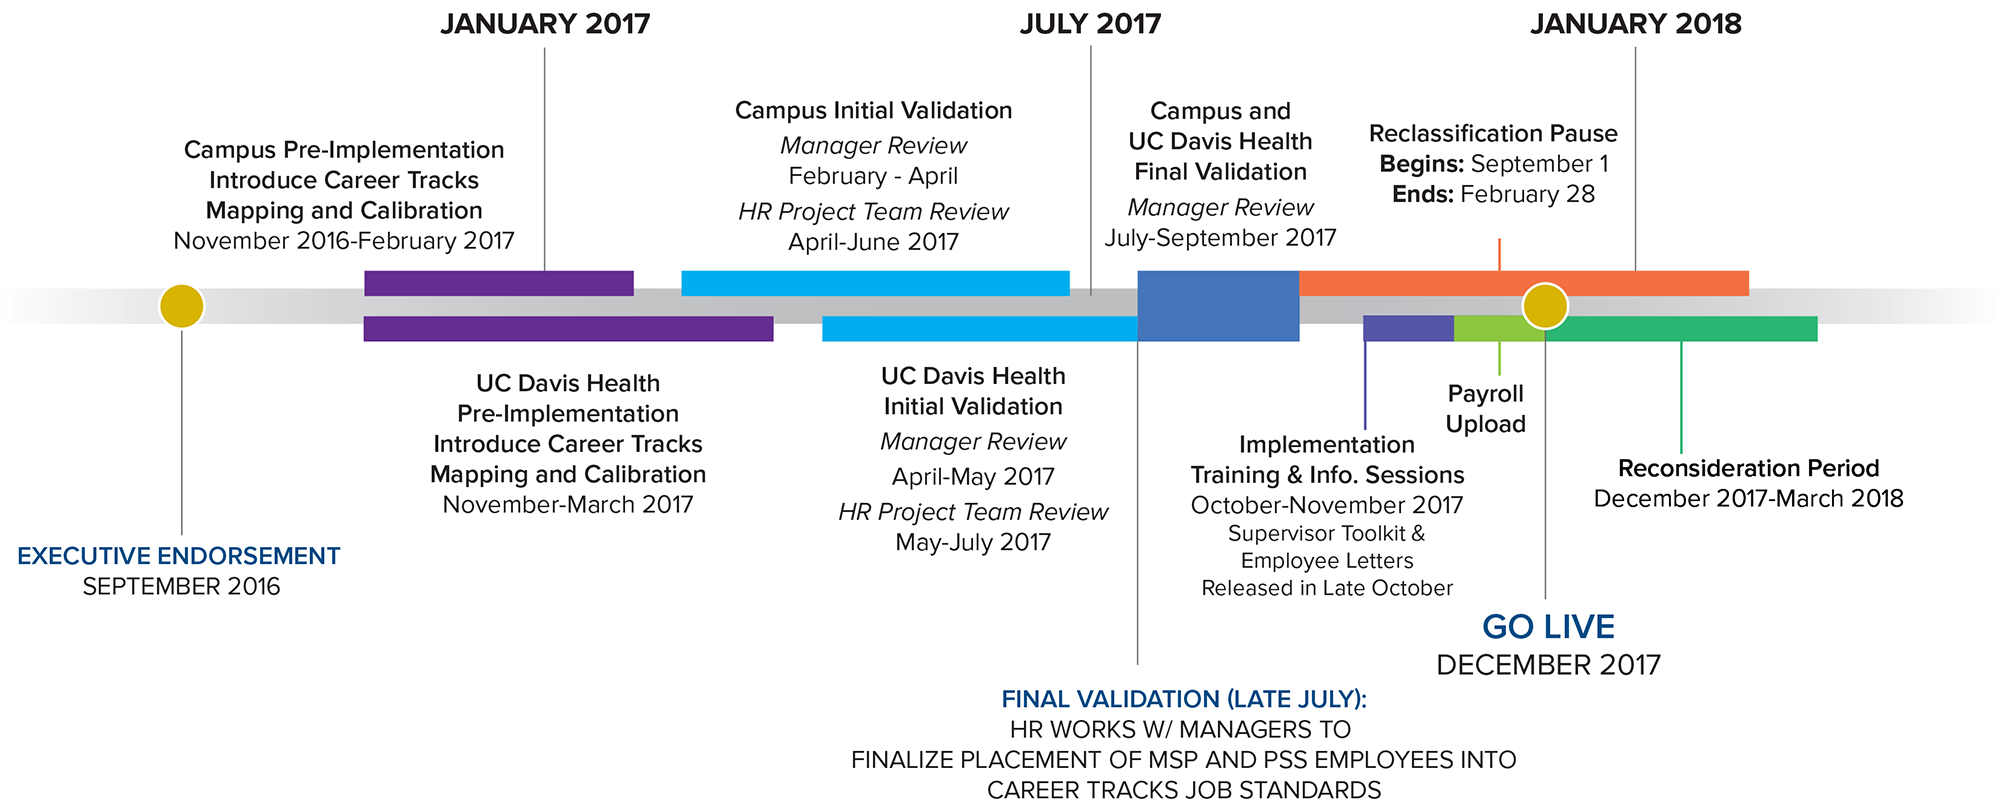 vector image of the uc davis career tracks timeline